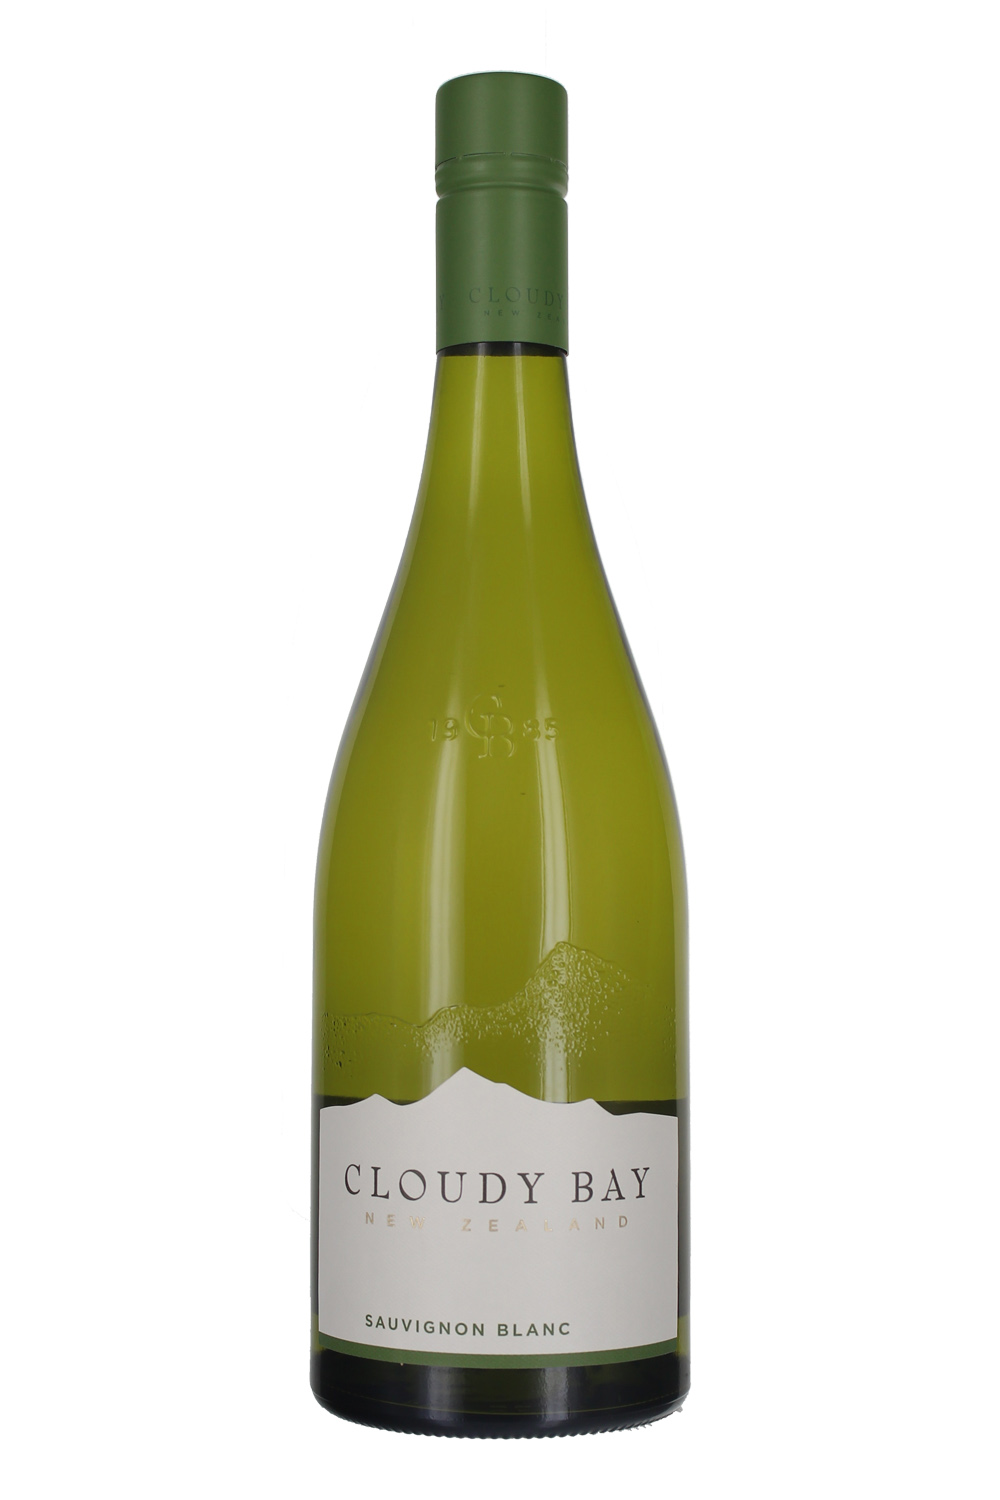  2019 Cloudy Bay Pinot Noir 750ml Cloudy Bay New